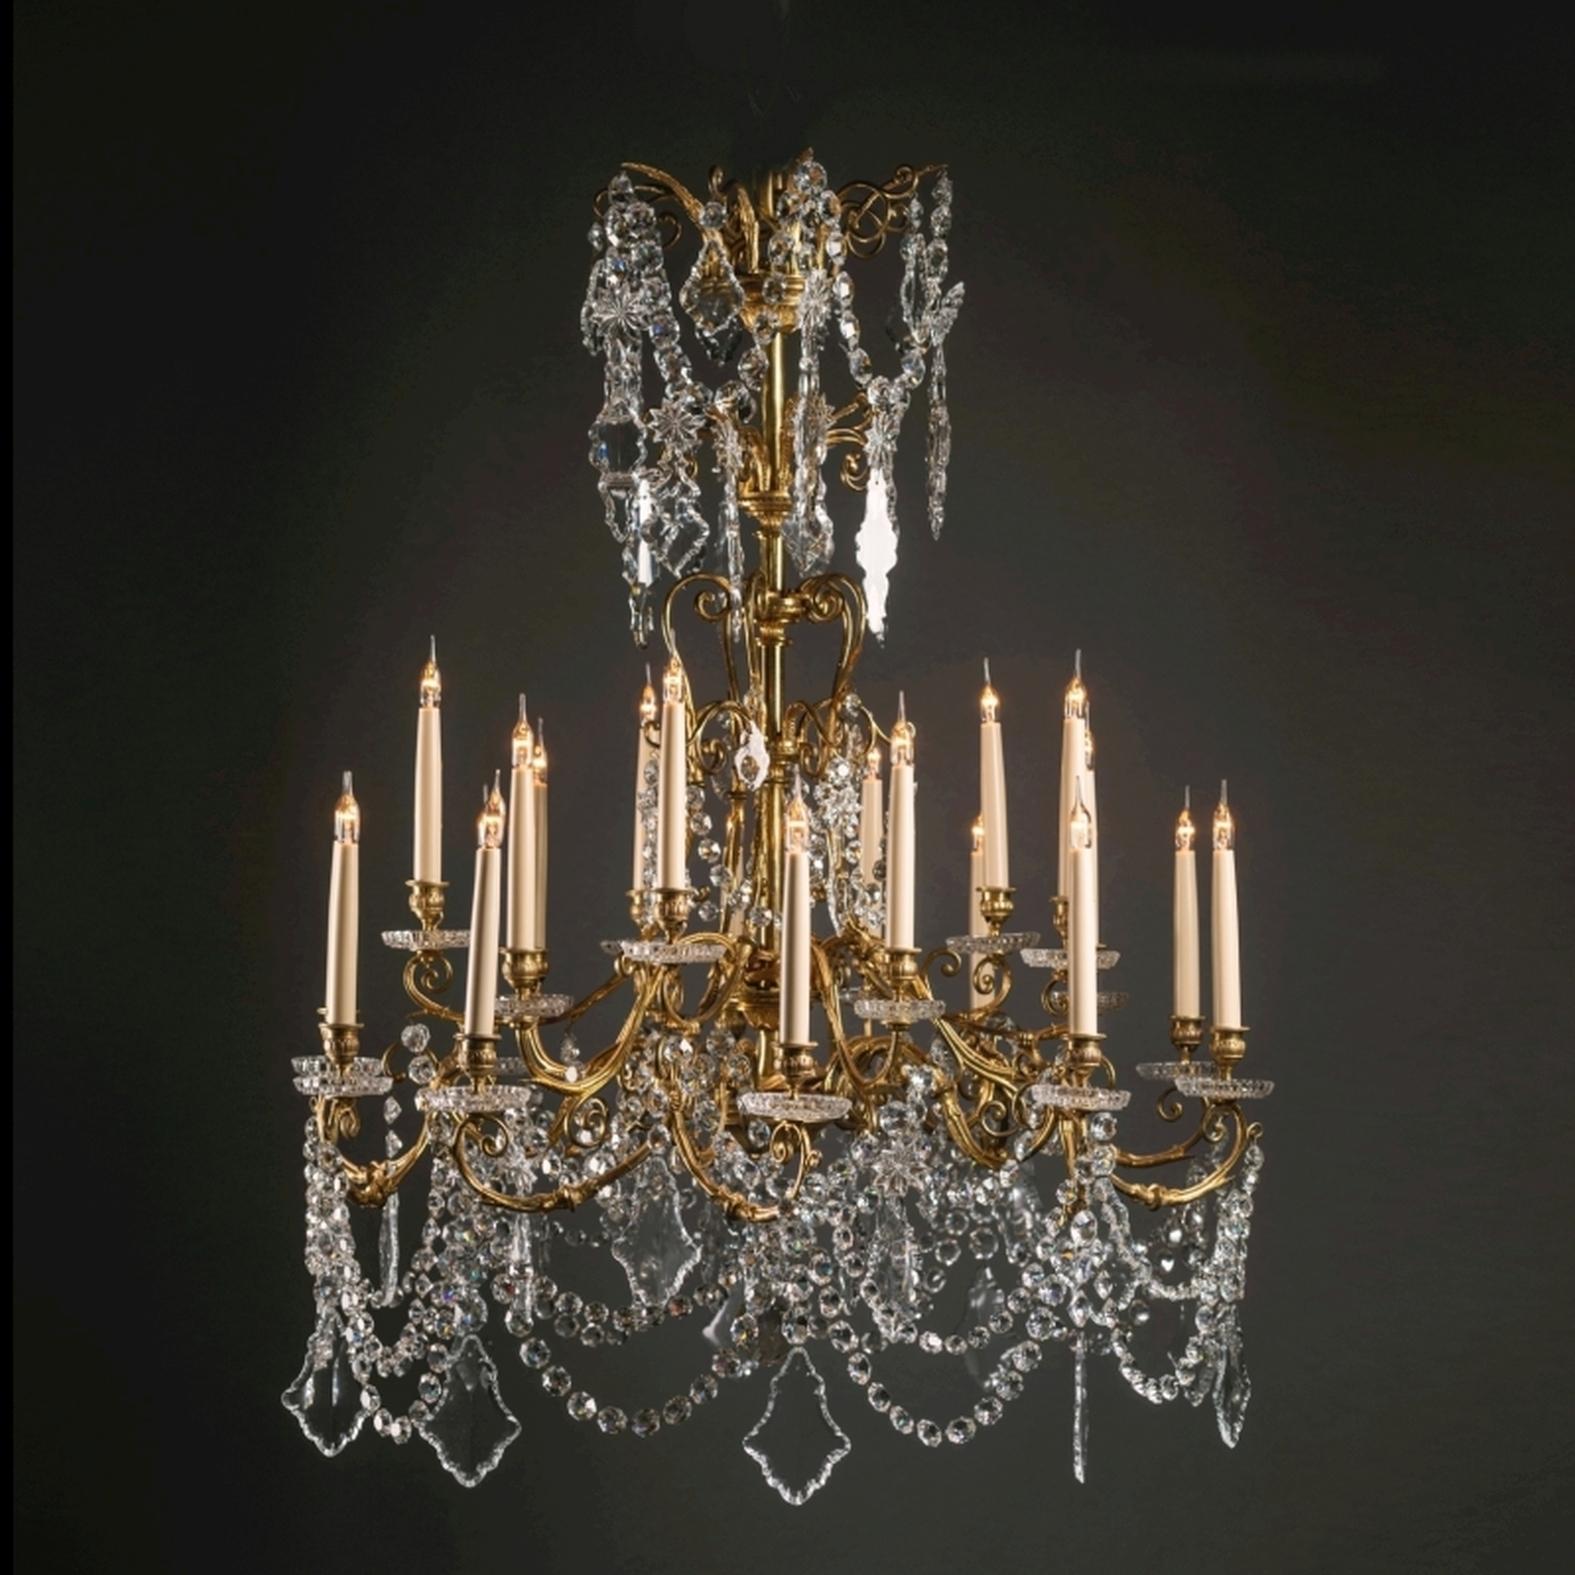 A fine Louis XV style gilt-bronze and cut-crystal twenty-light chandelier by La Compagnie des Cristalleries de Baccarat,

French, Circa 1890.